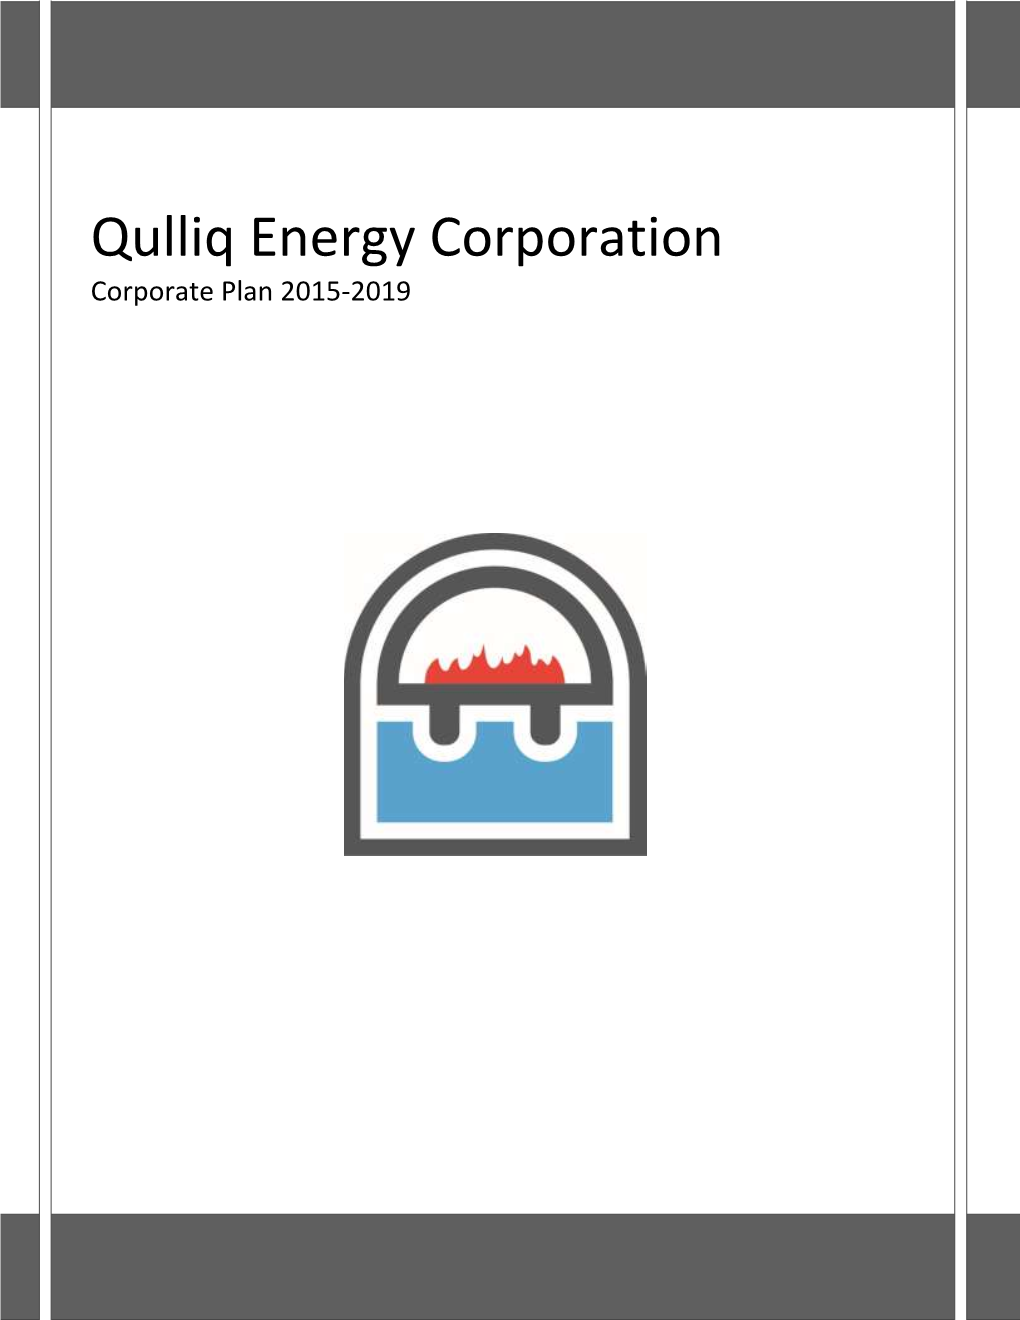 Qulliq Energy Corporation Corporate Plan 2015-2019